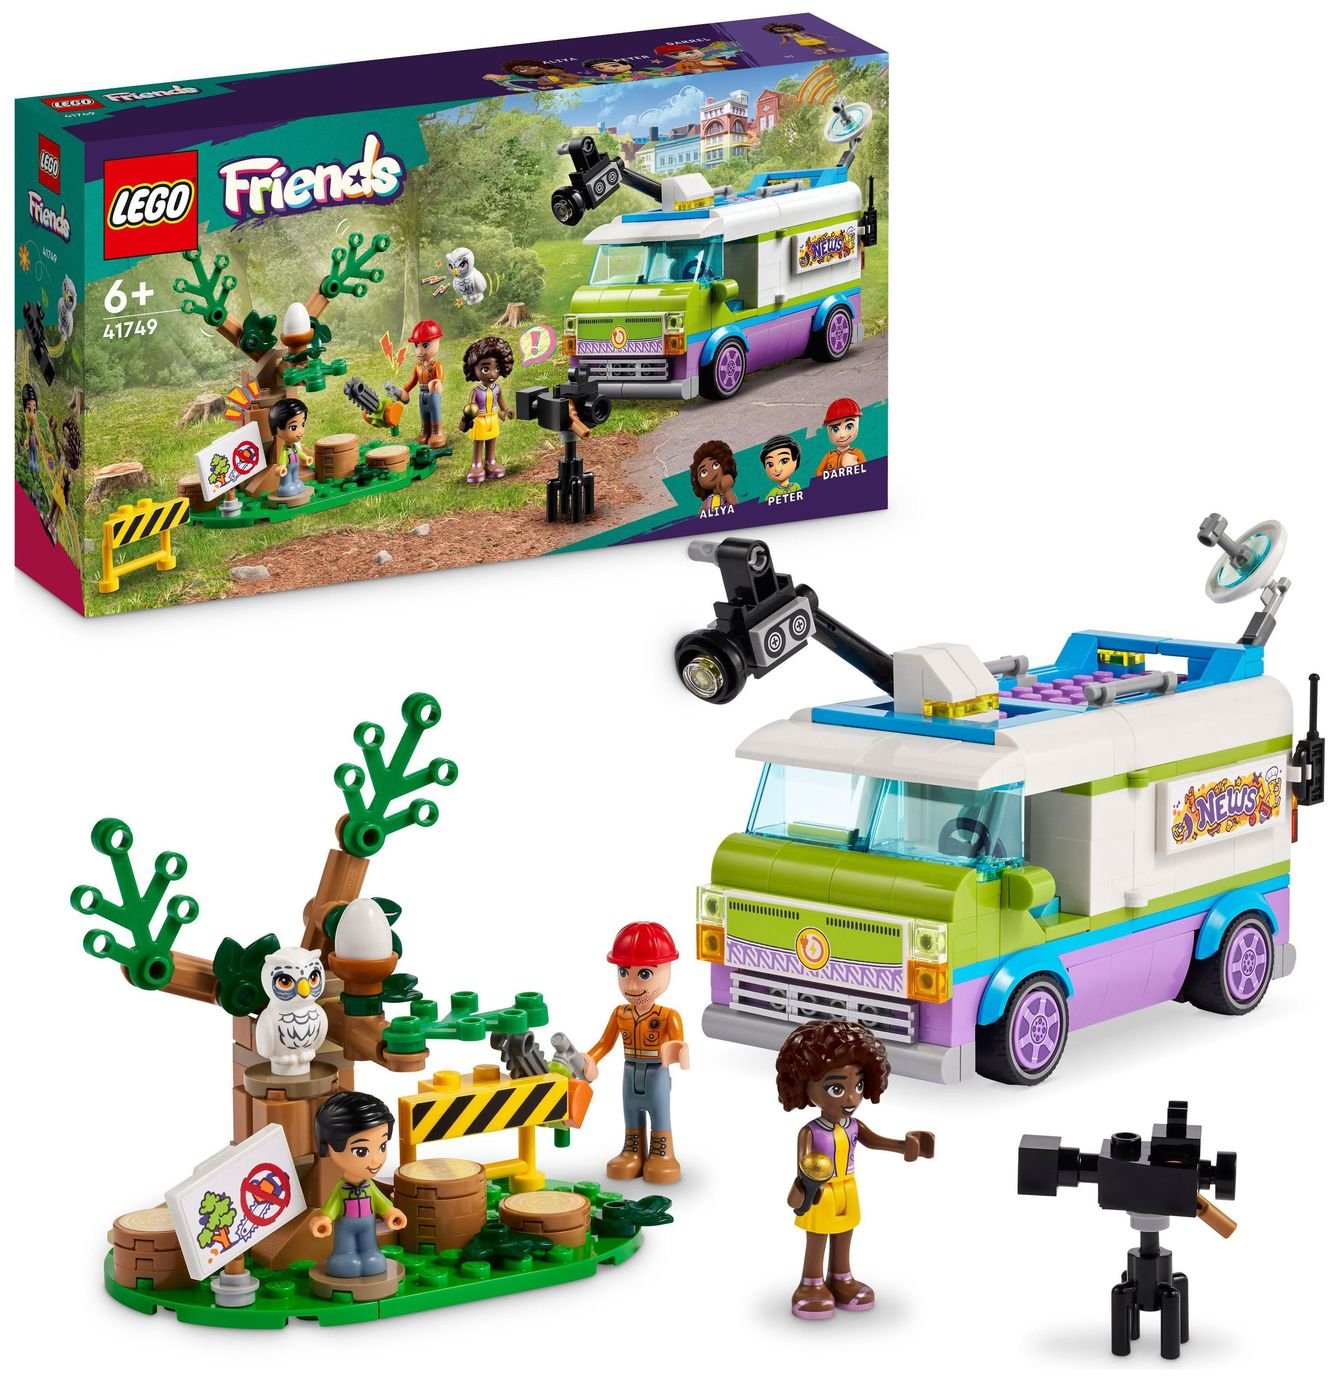 LEGO Friends Newsroom Van Animal Rescue Toy Playset 41749